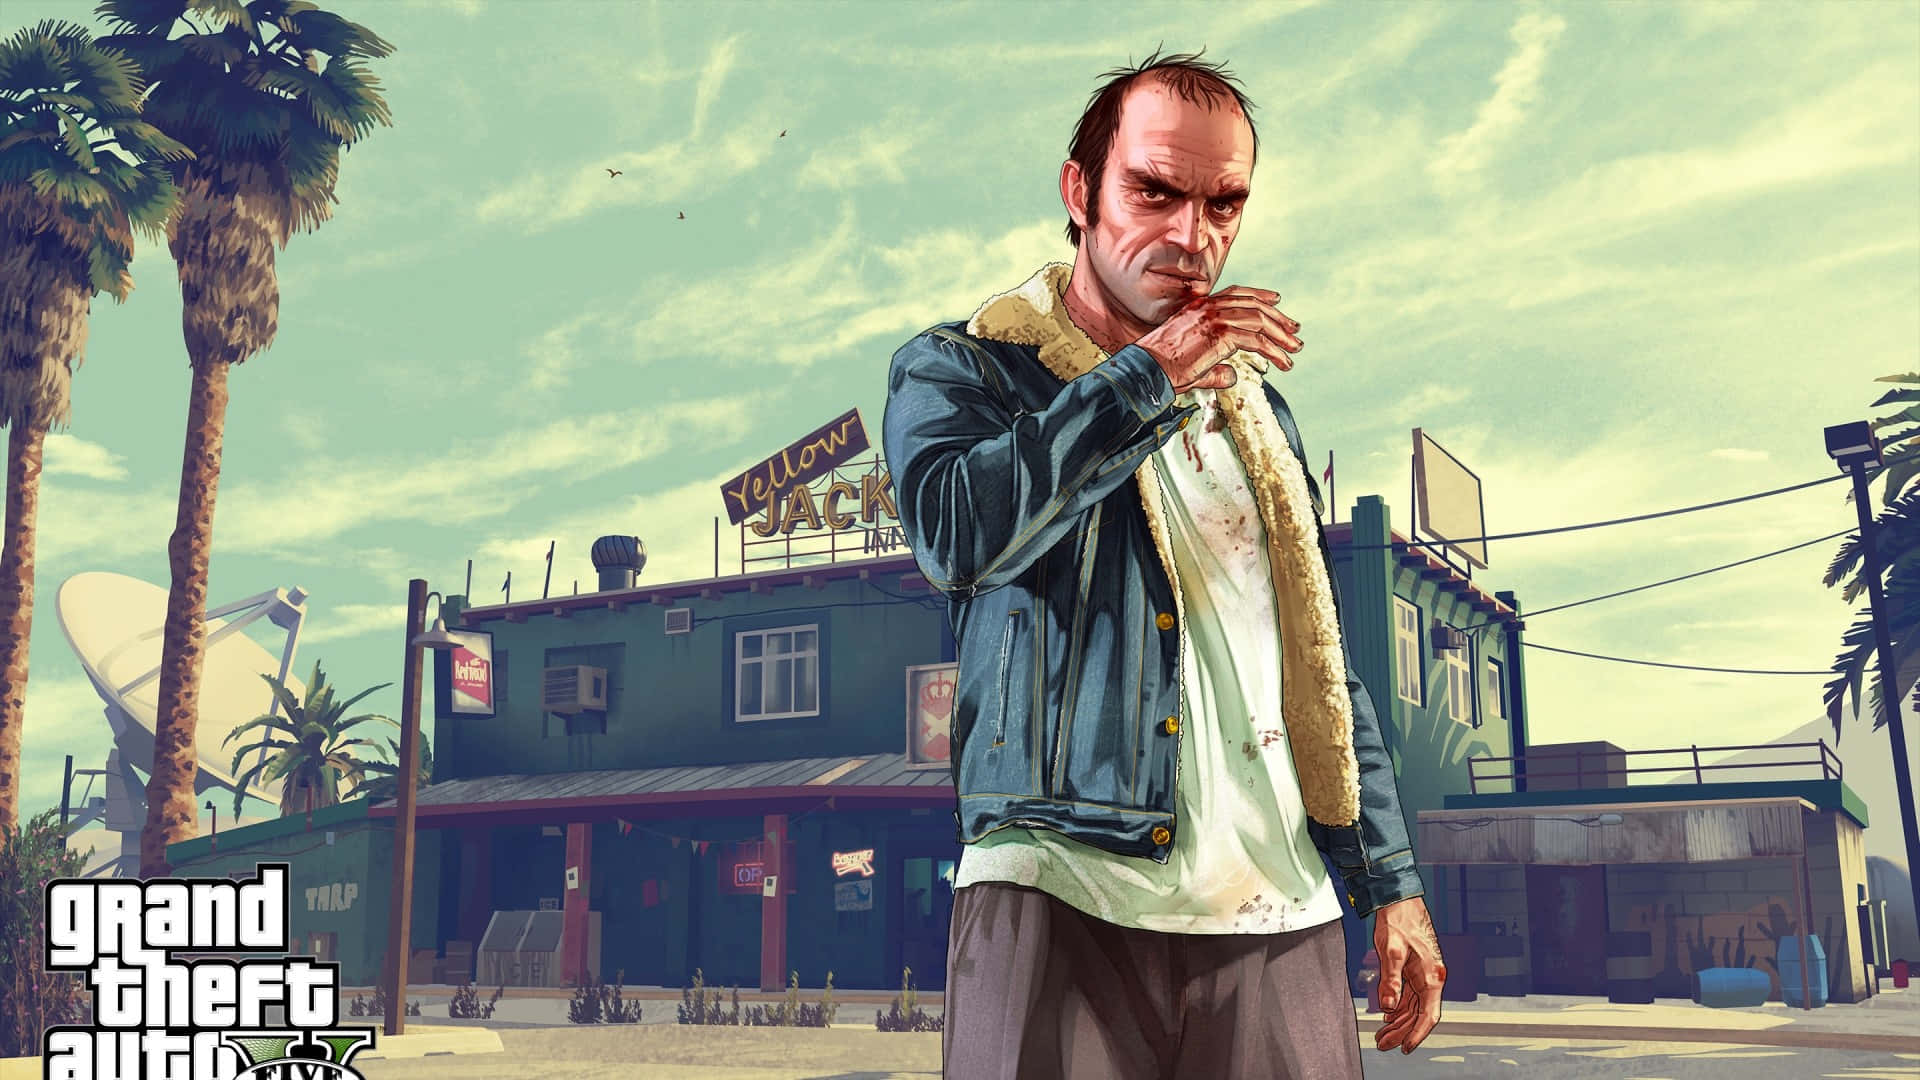 Nyd Grand Theft Auto Online med dette eksplosionsfyldte tapet. Wallpaper